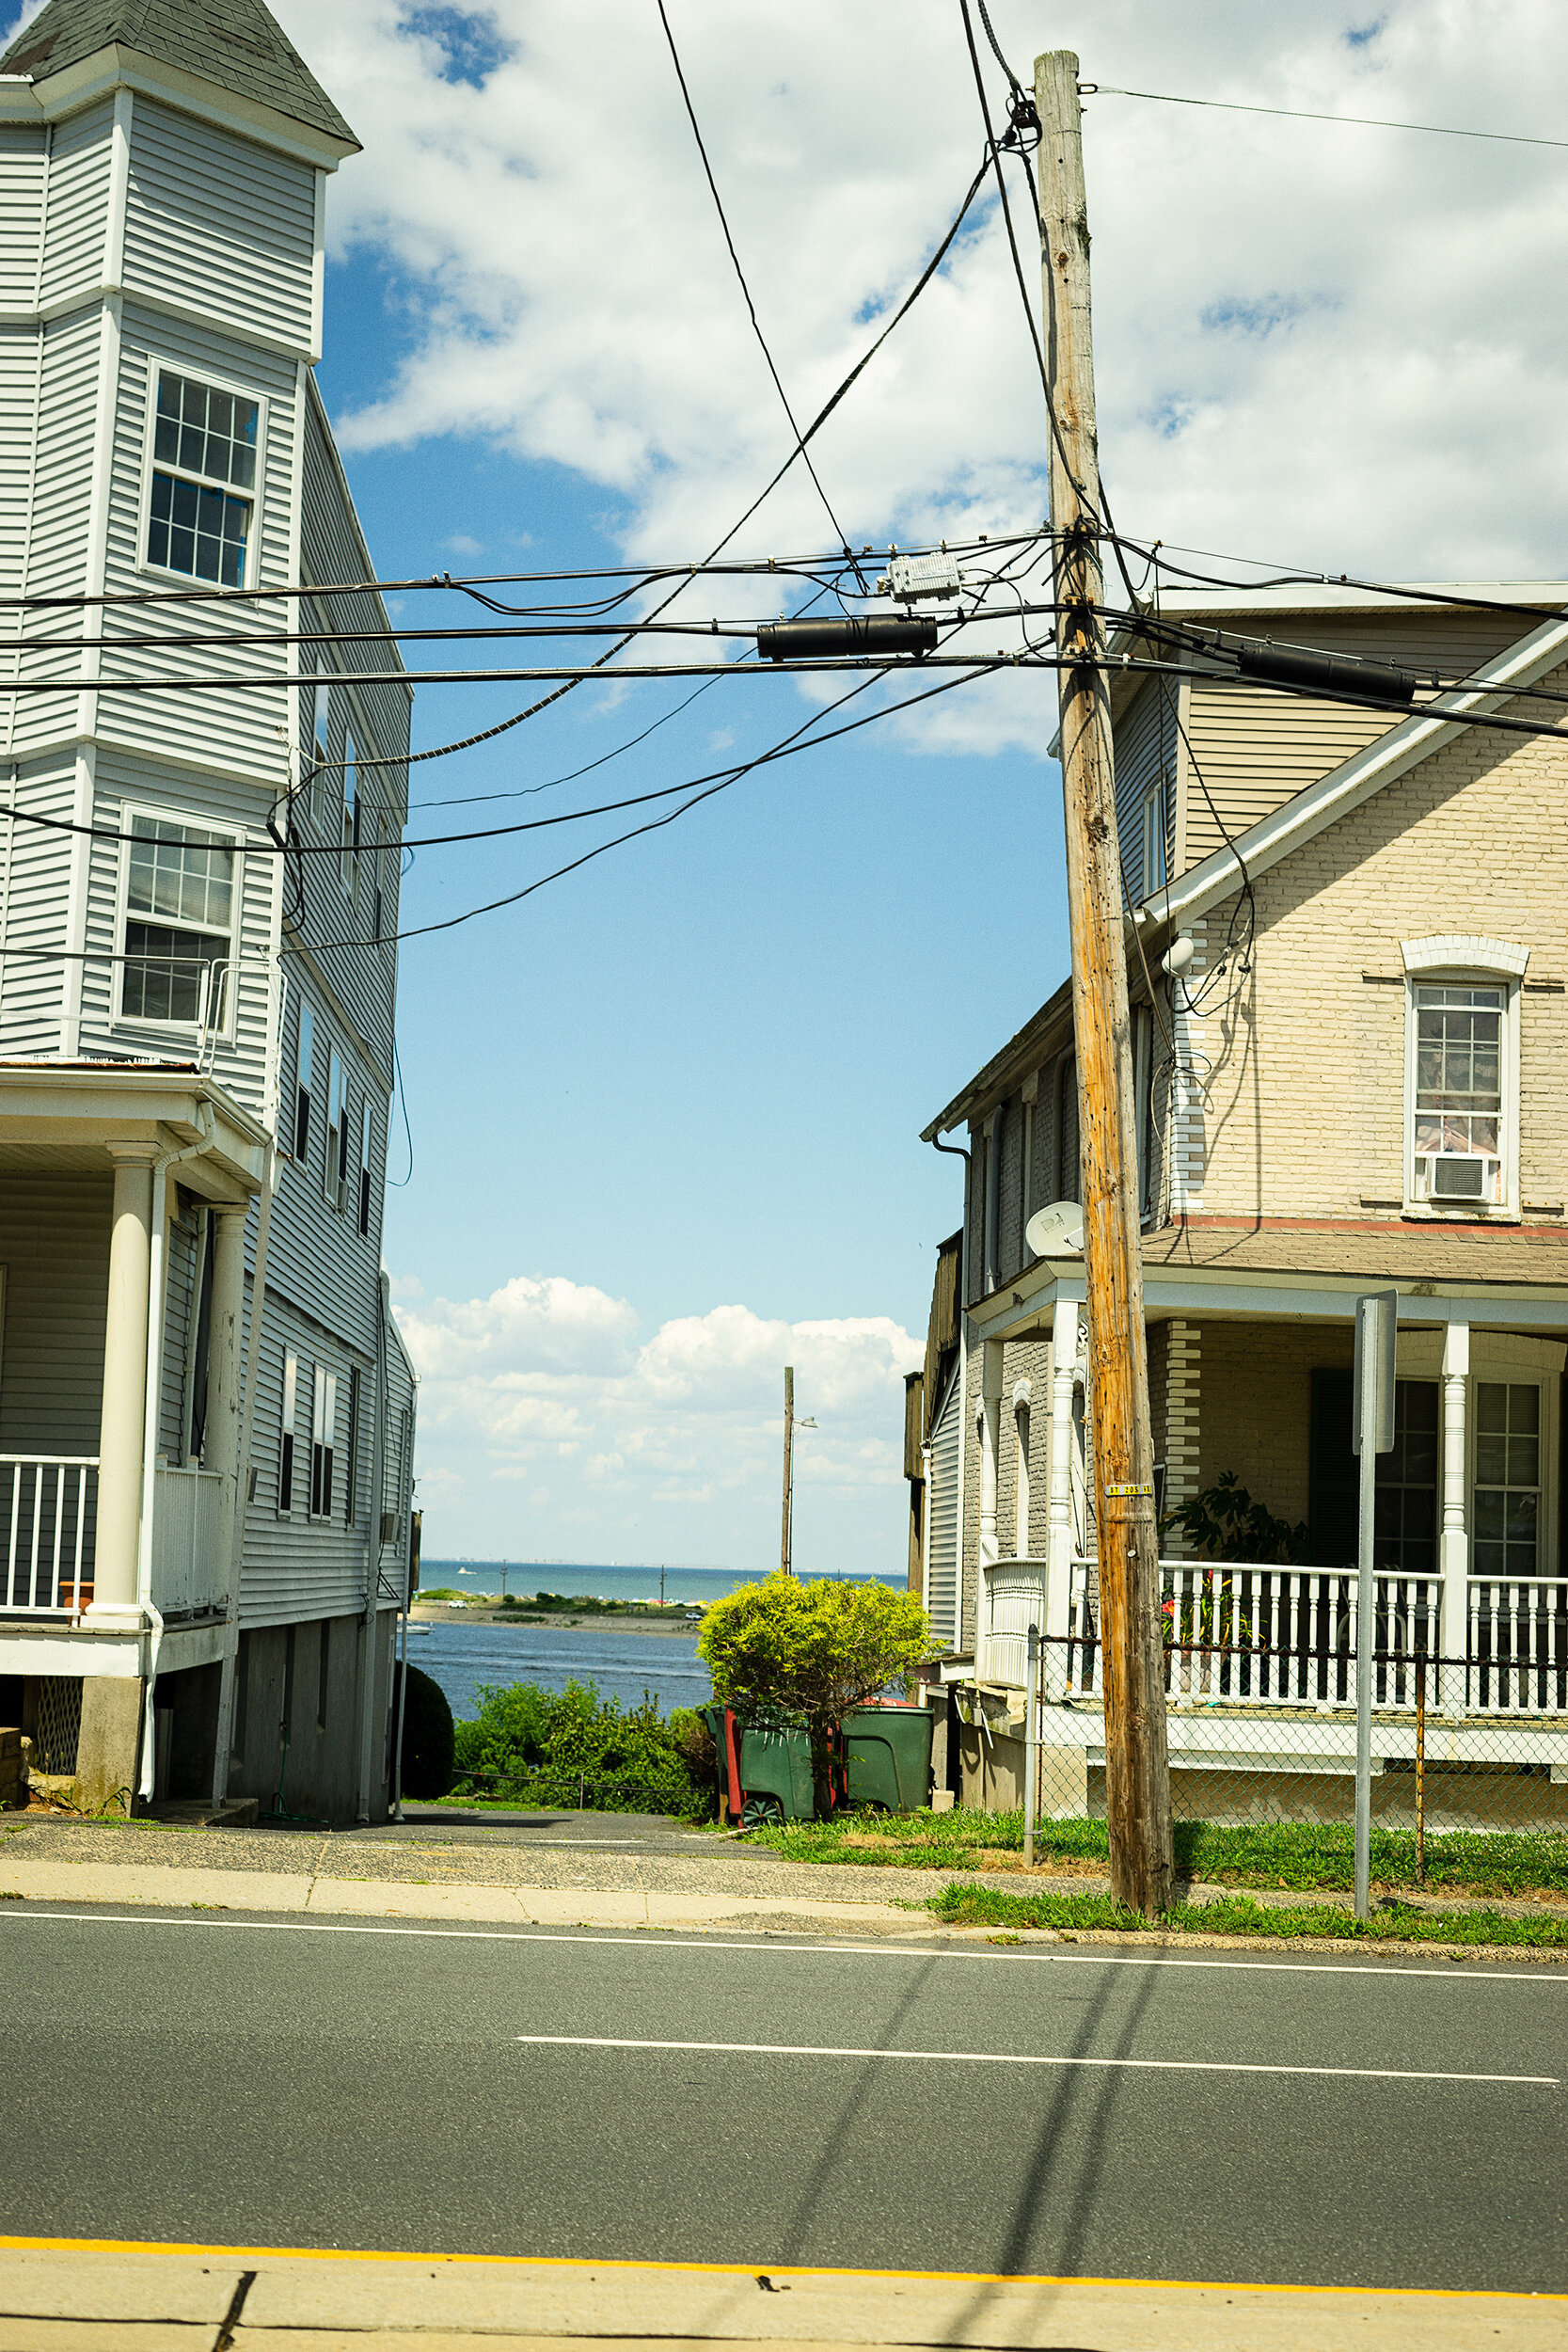 Houses near Sandy Hook, 2020 - New Jersey 